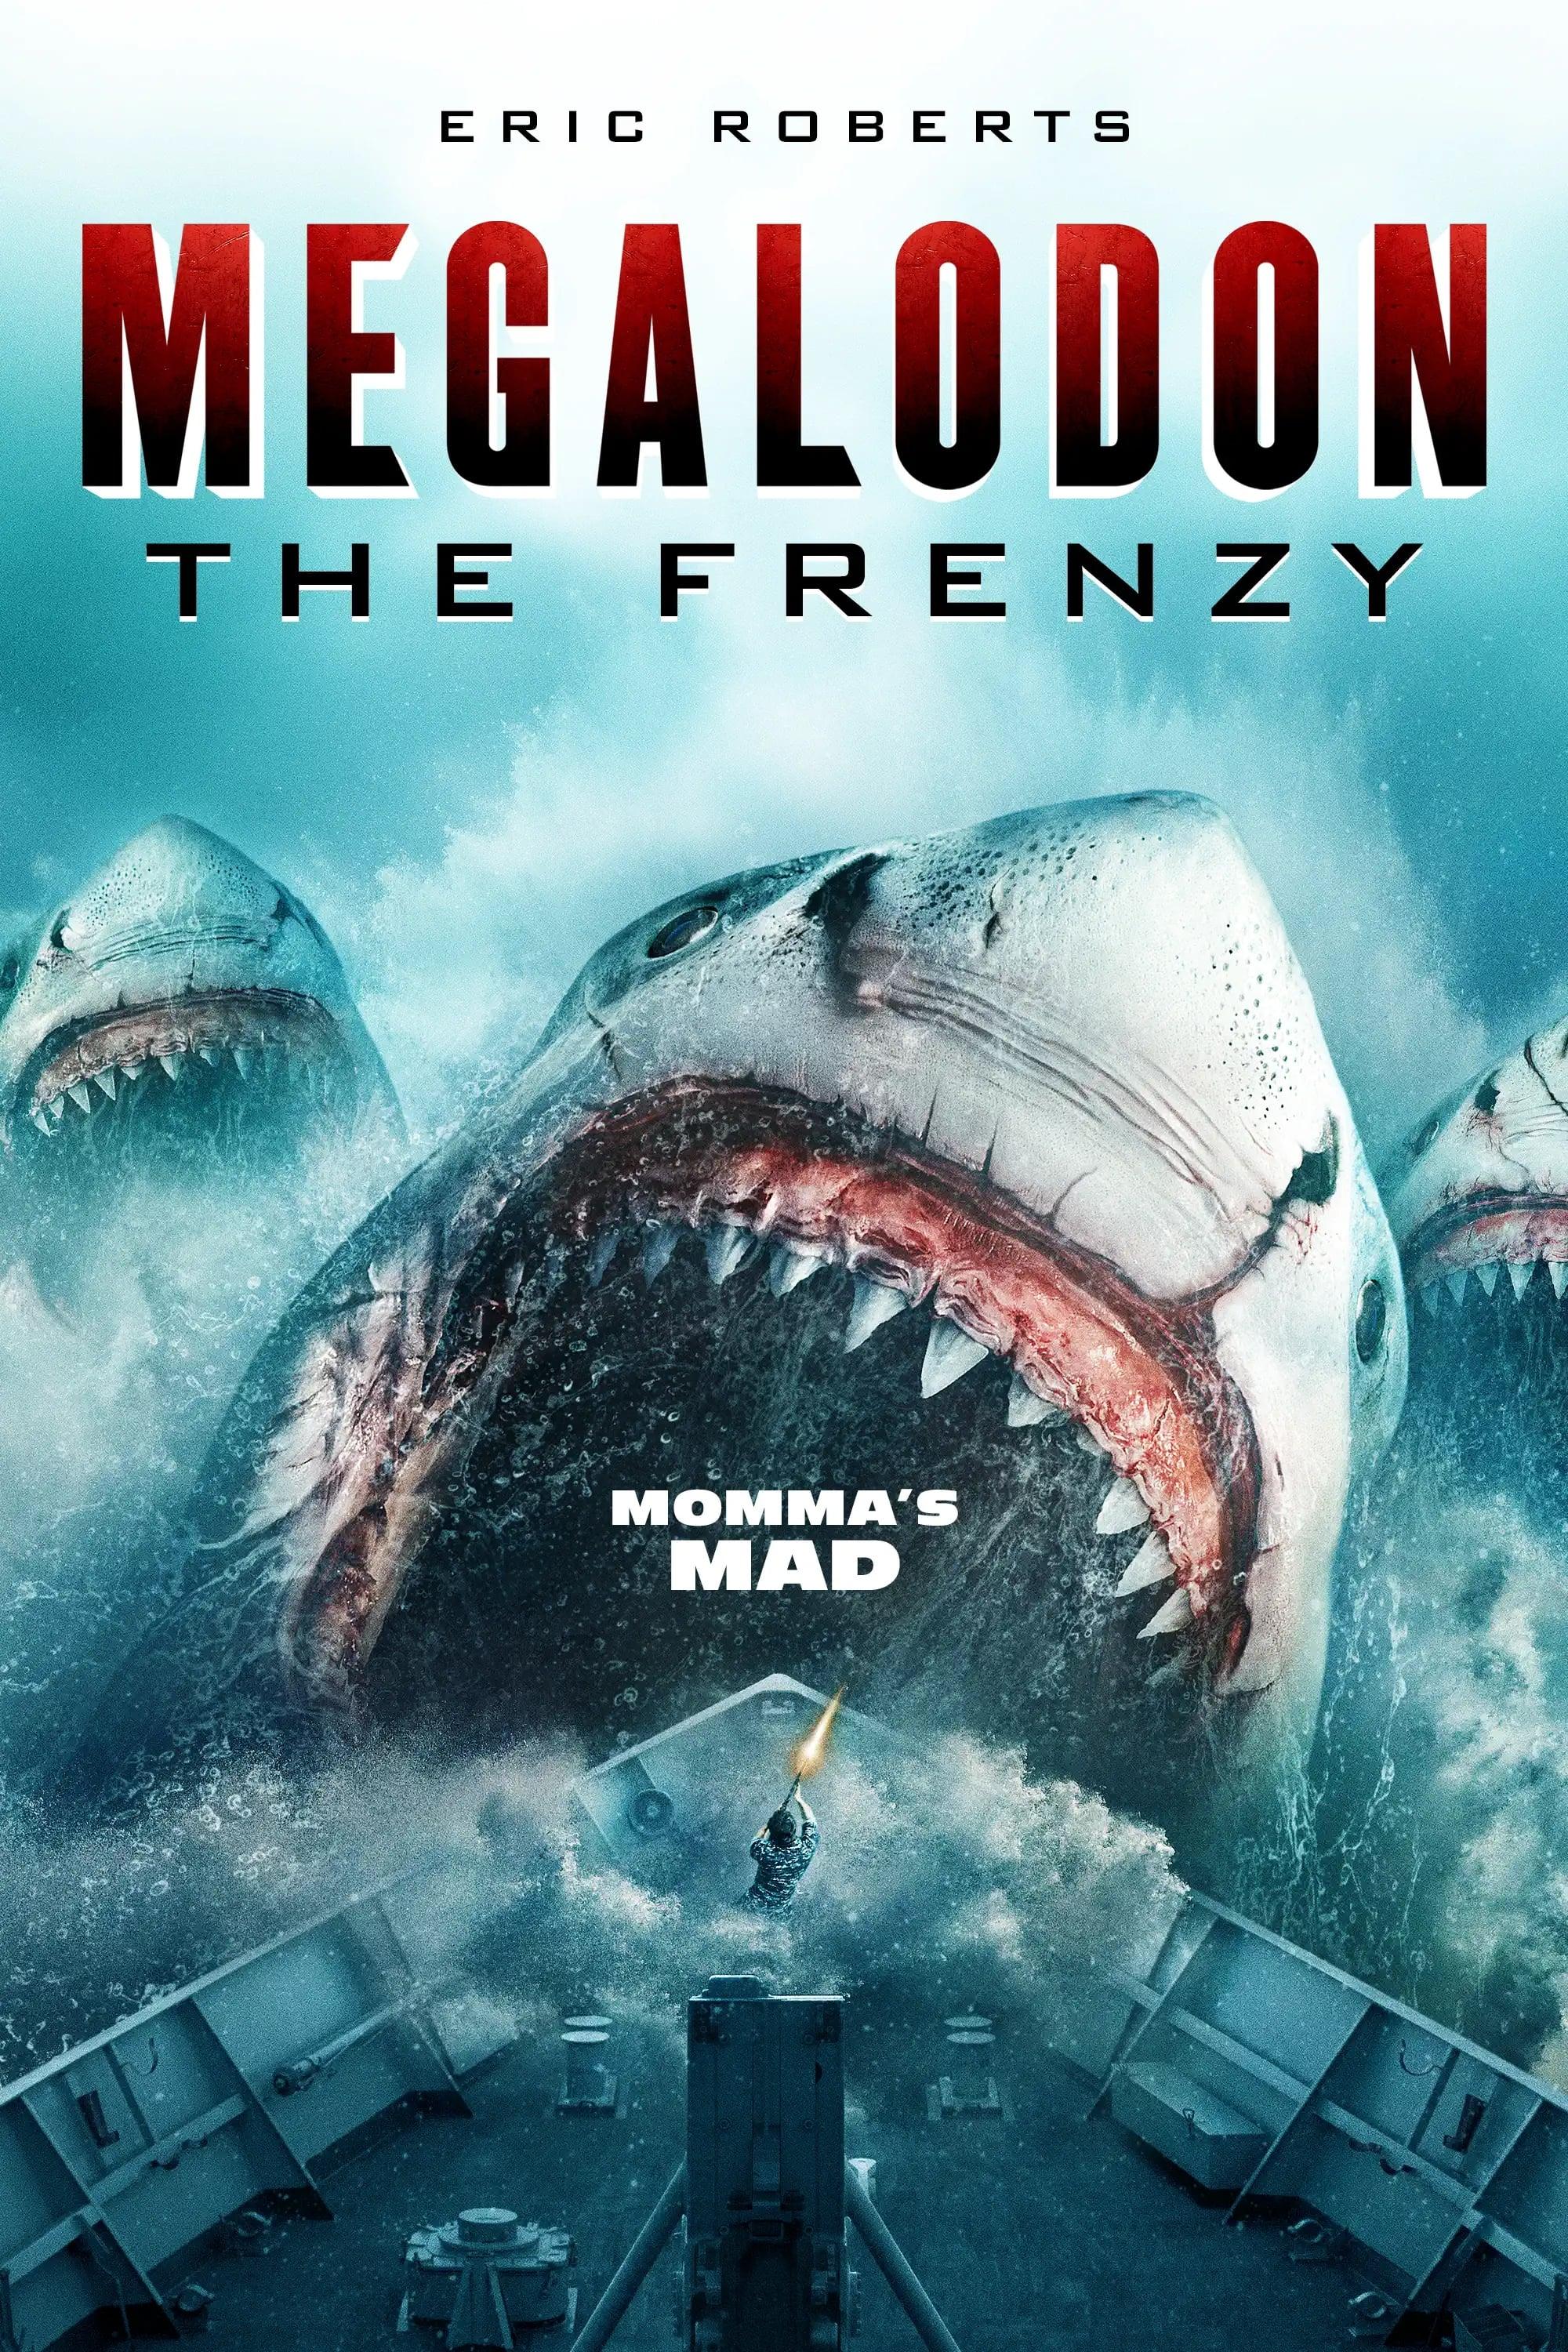 Megalodon: The Frenzy poster